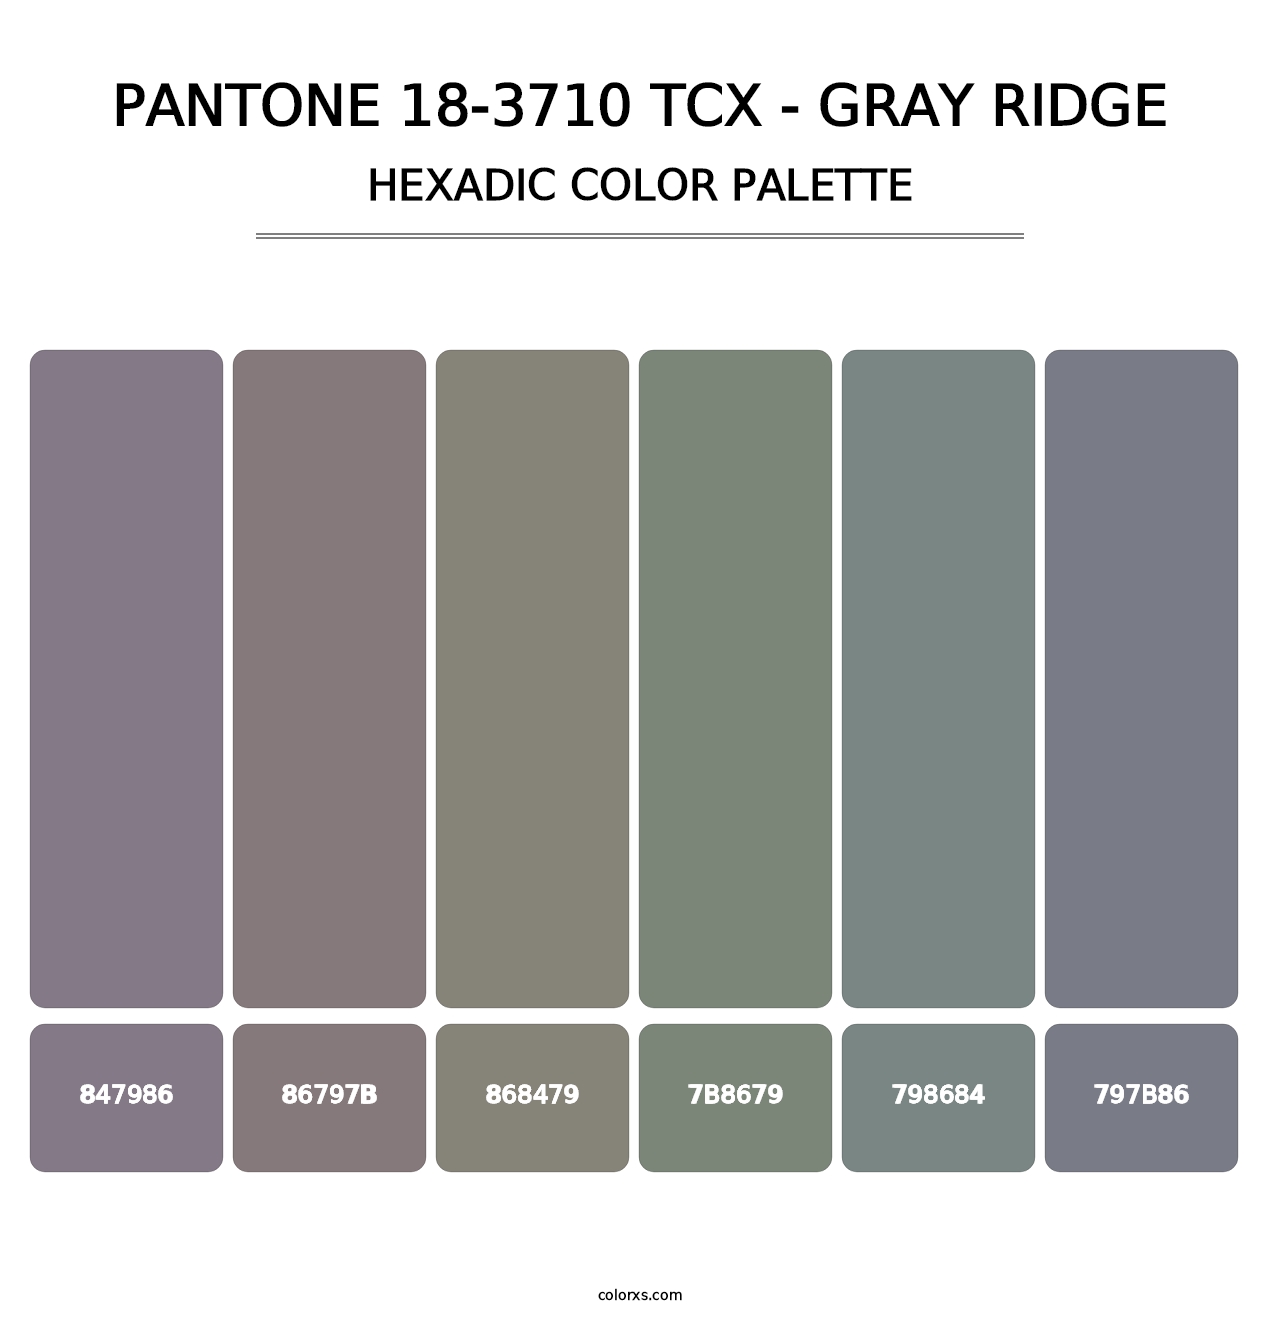 PANTONE 18-3710 TCX - Gray Ridge - Hexadic Color Palette